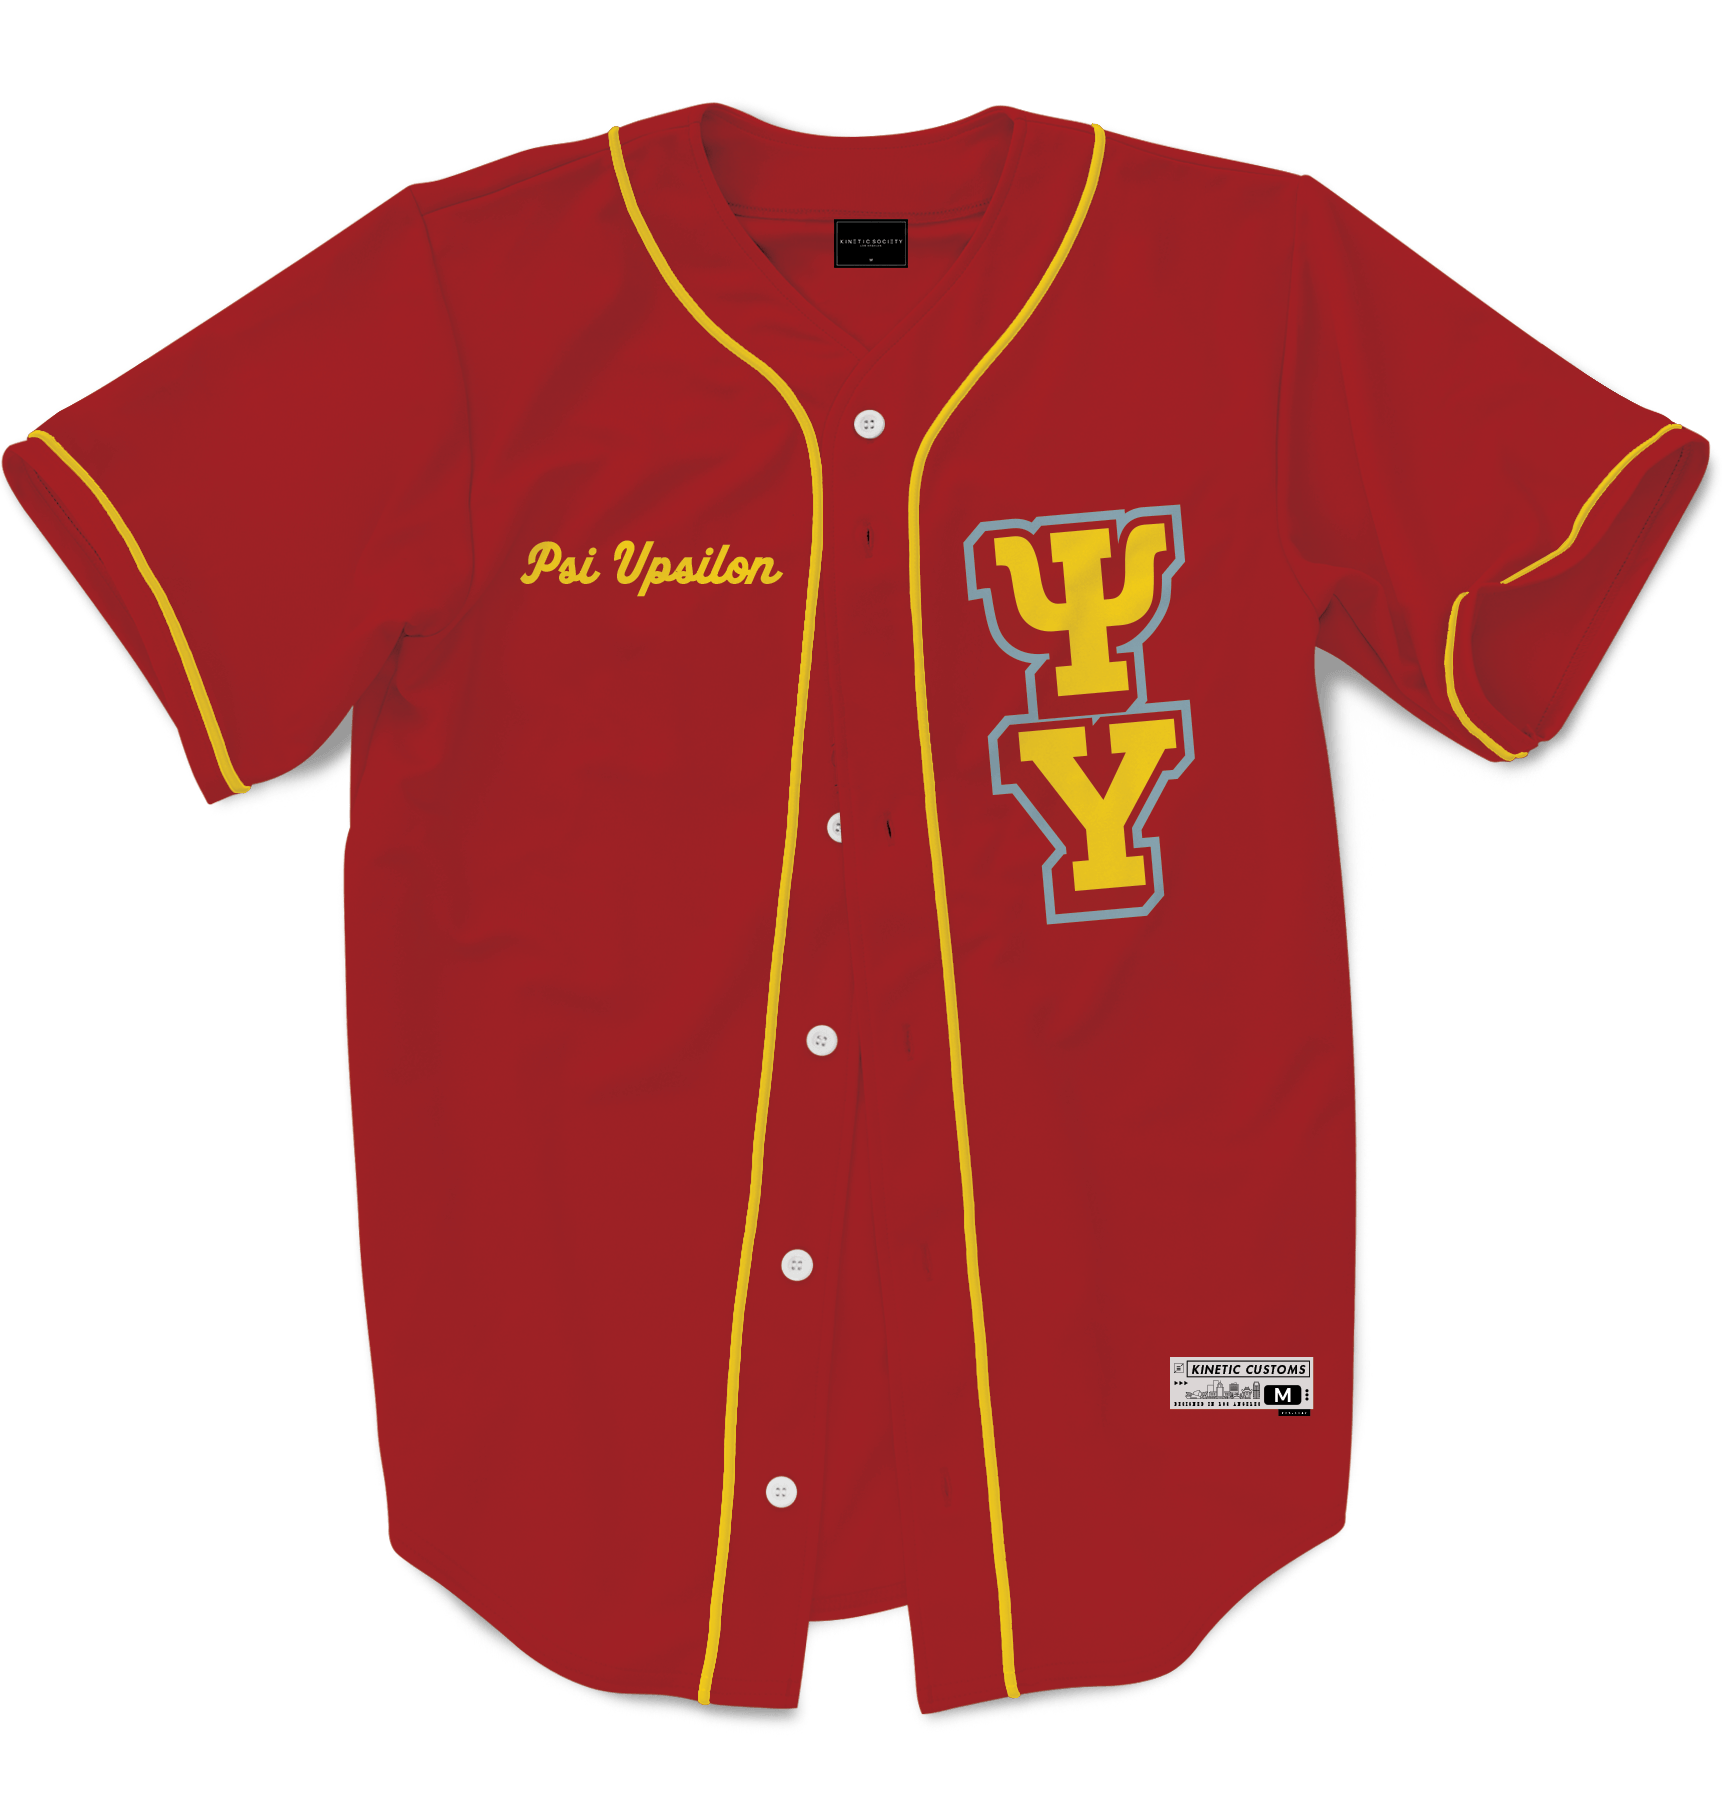 Psi Upsilon - The Block Baseball Jersey Premium Baseball Kinetic Society LLC 